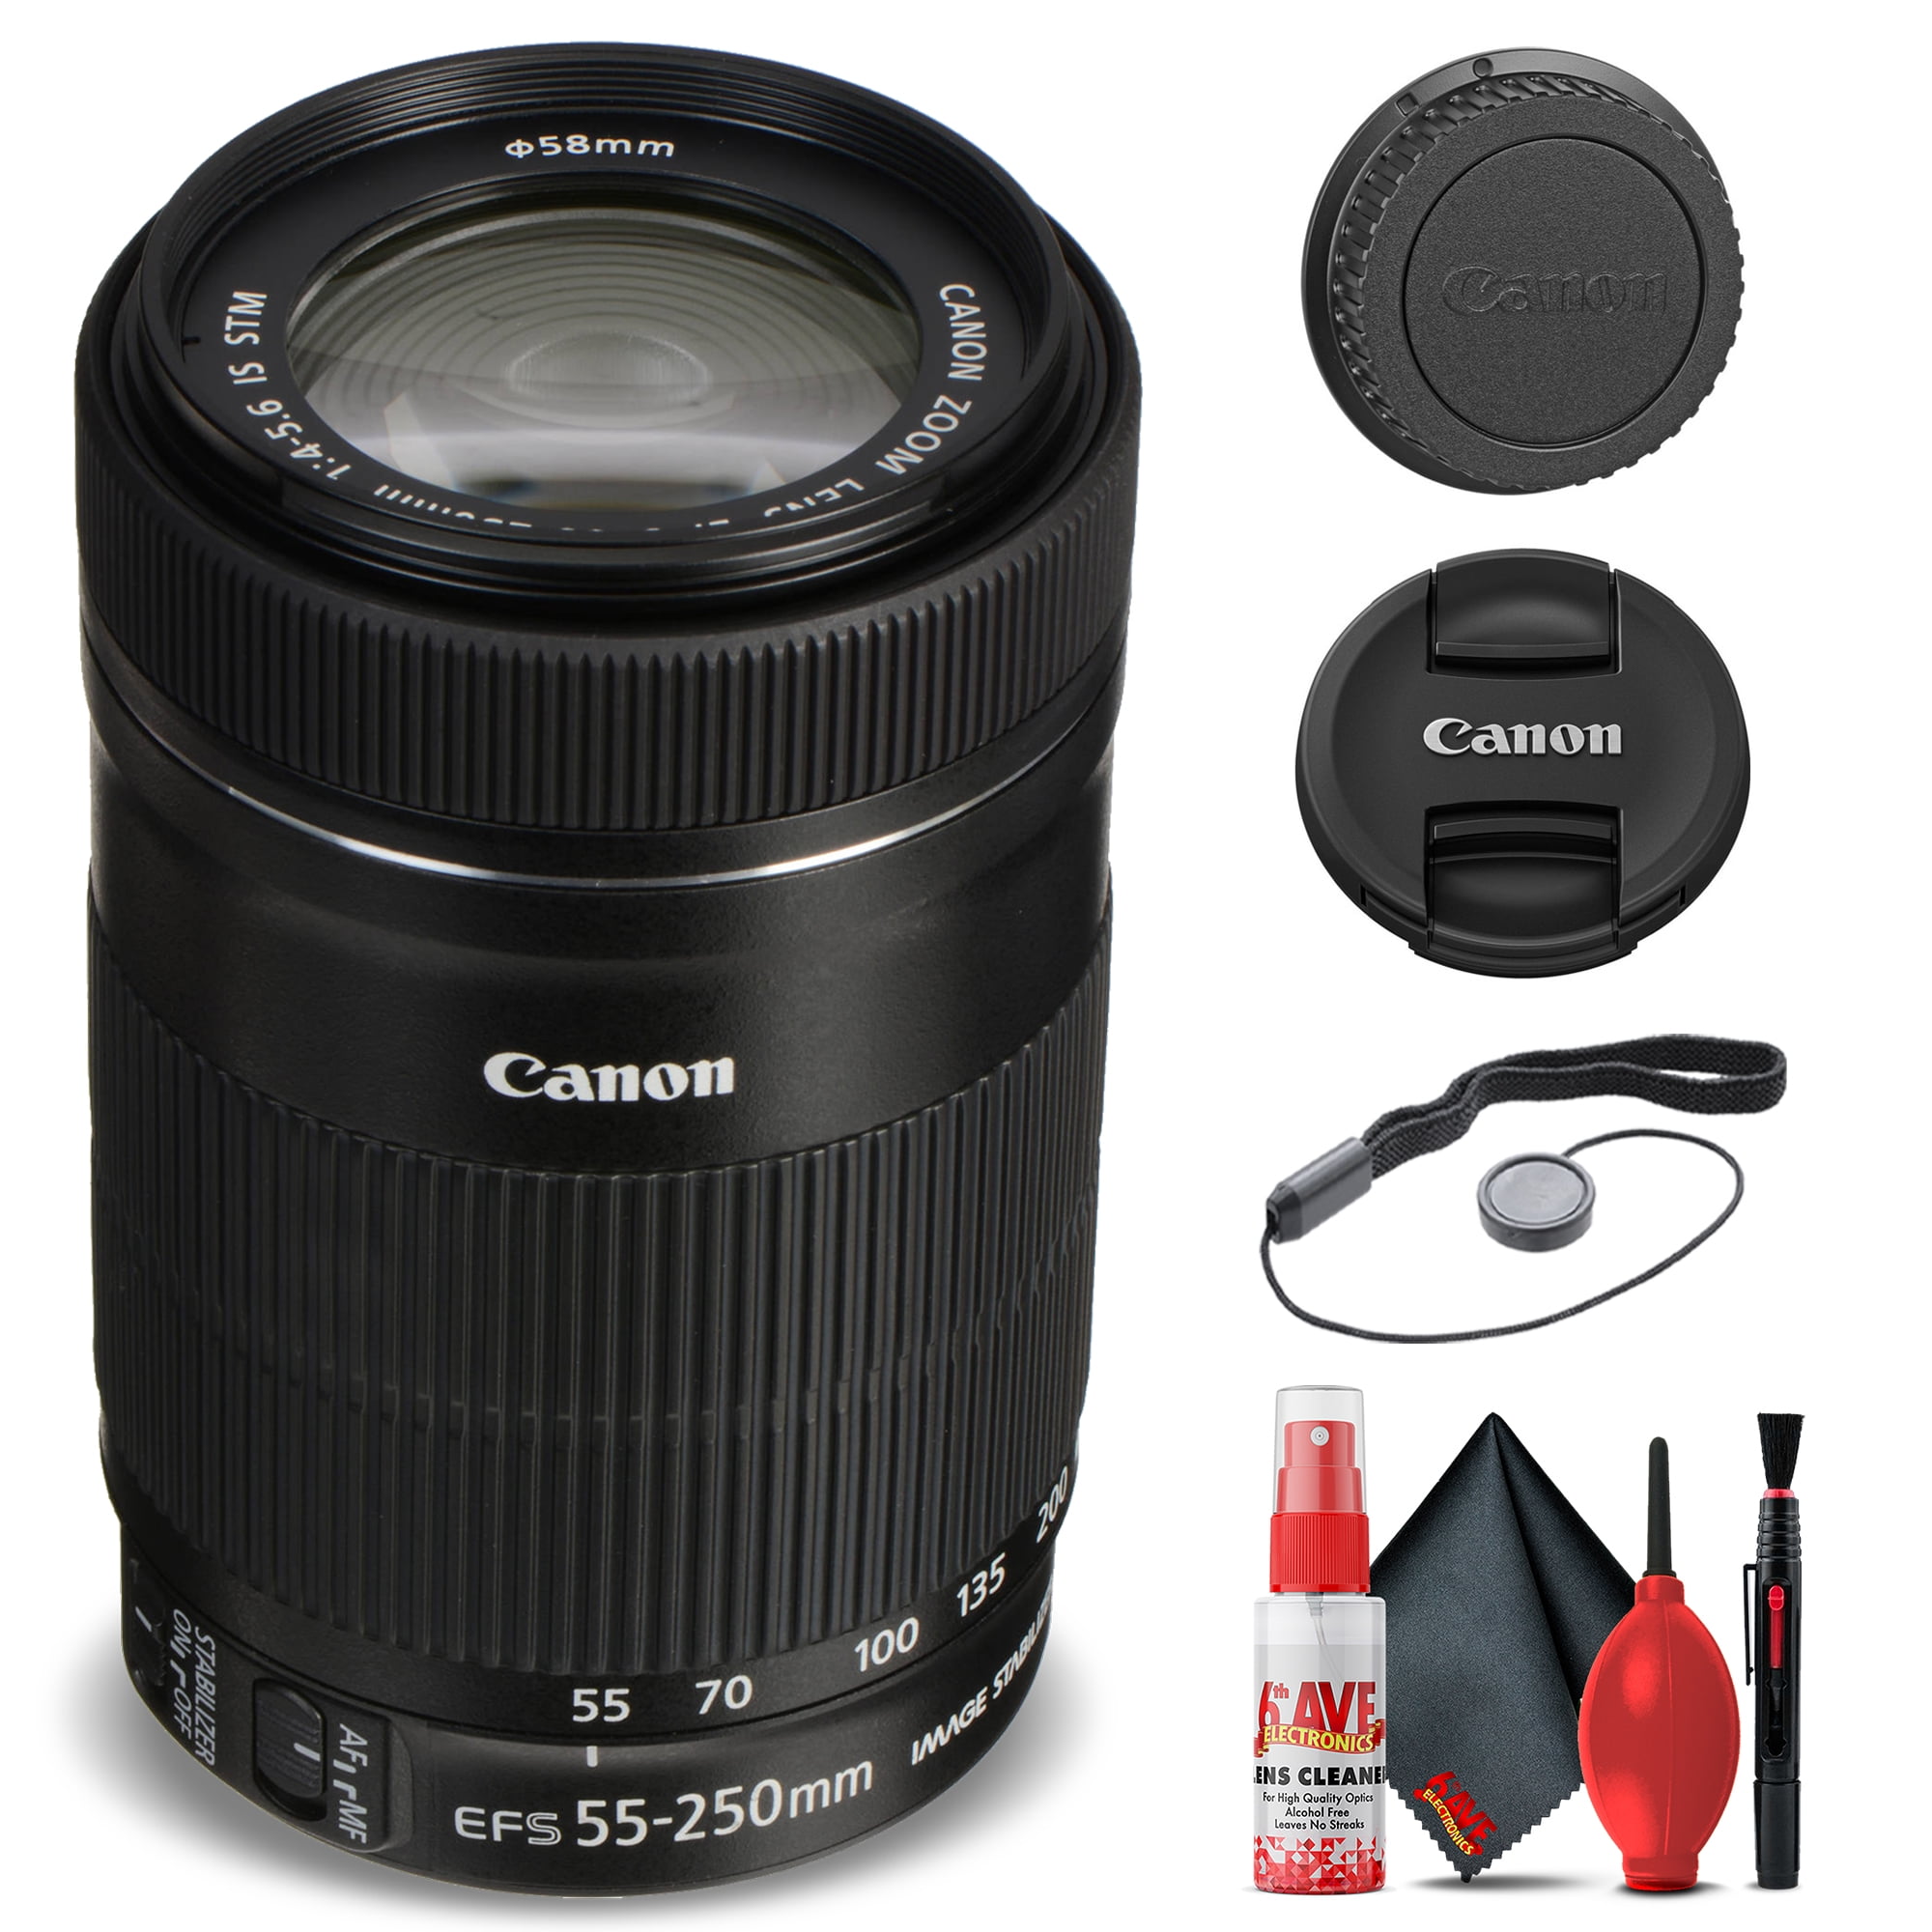 Canon EF-S 55-250mm f/4-5.6 IS STM Lens (8546B002) + Filter Kit + More